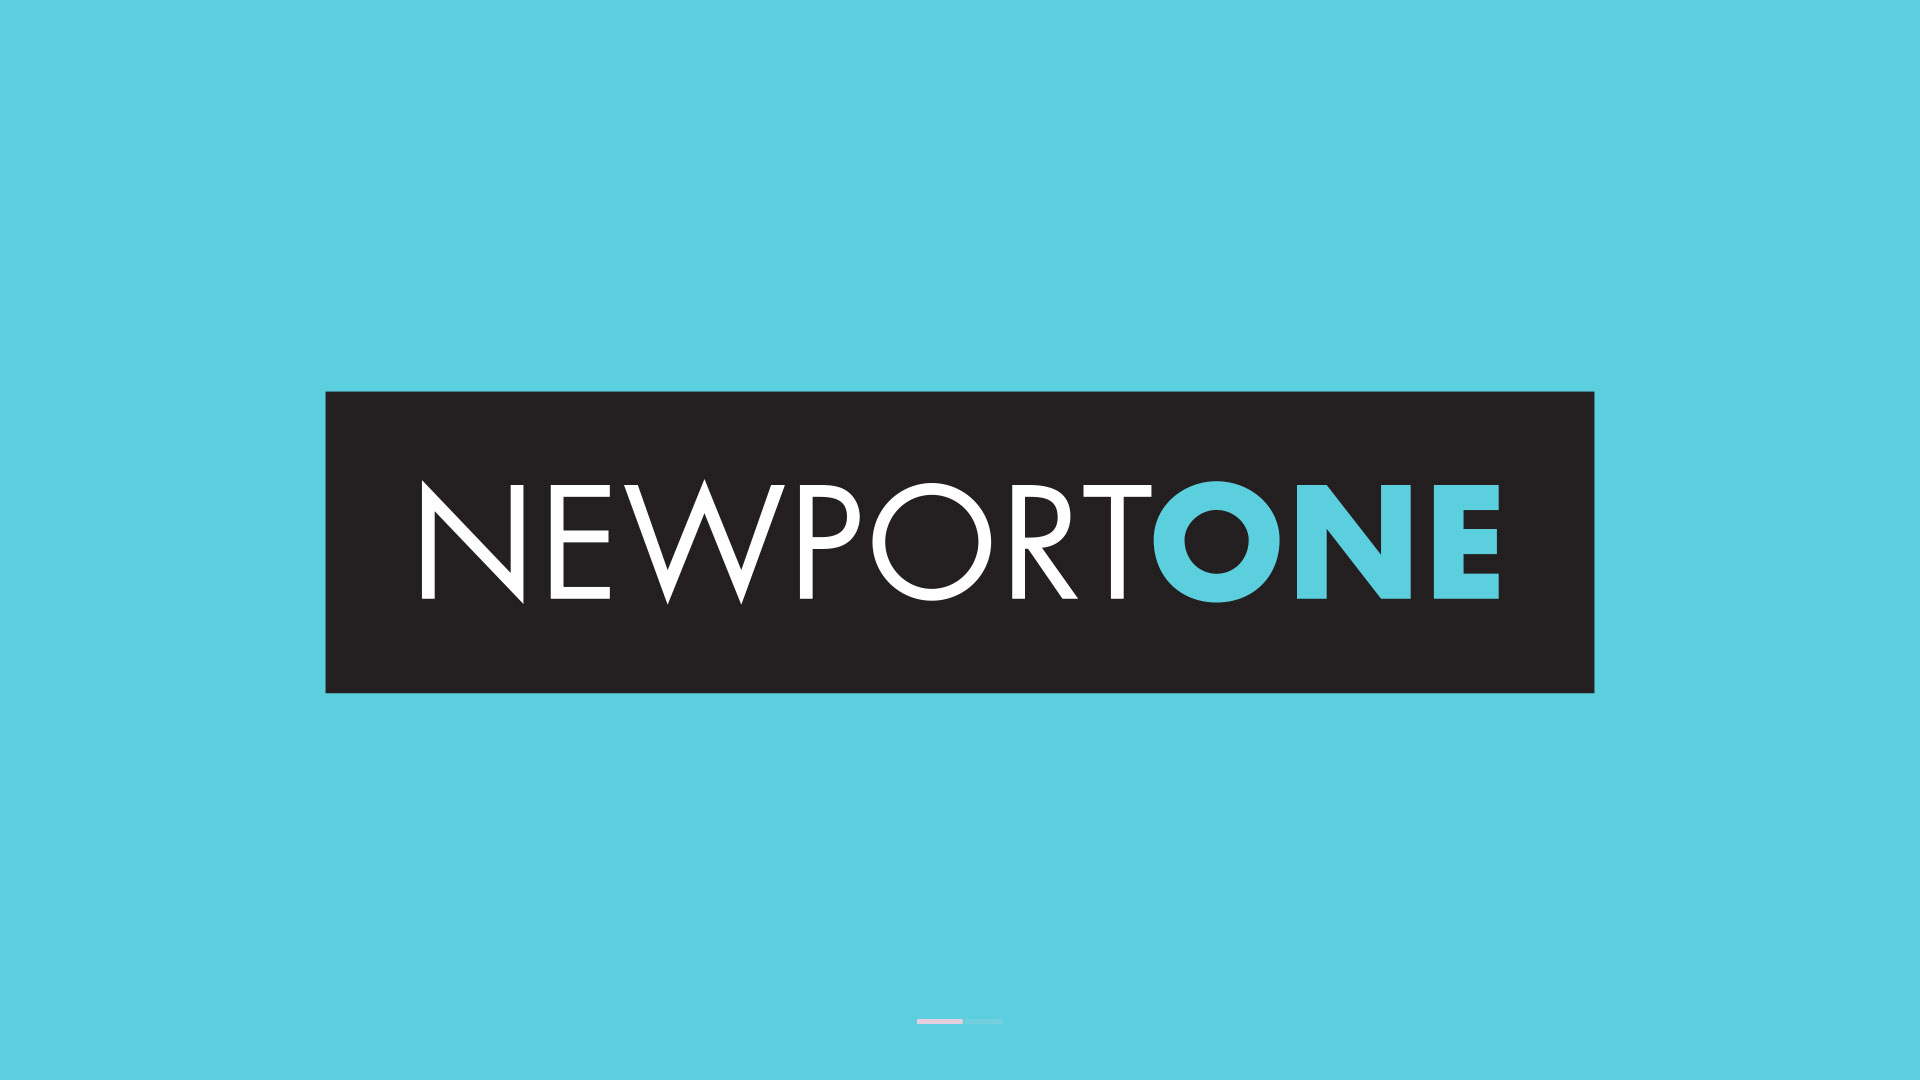 newport one logo on blue